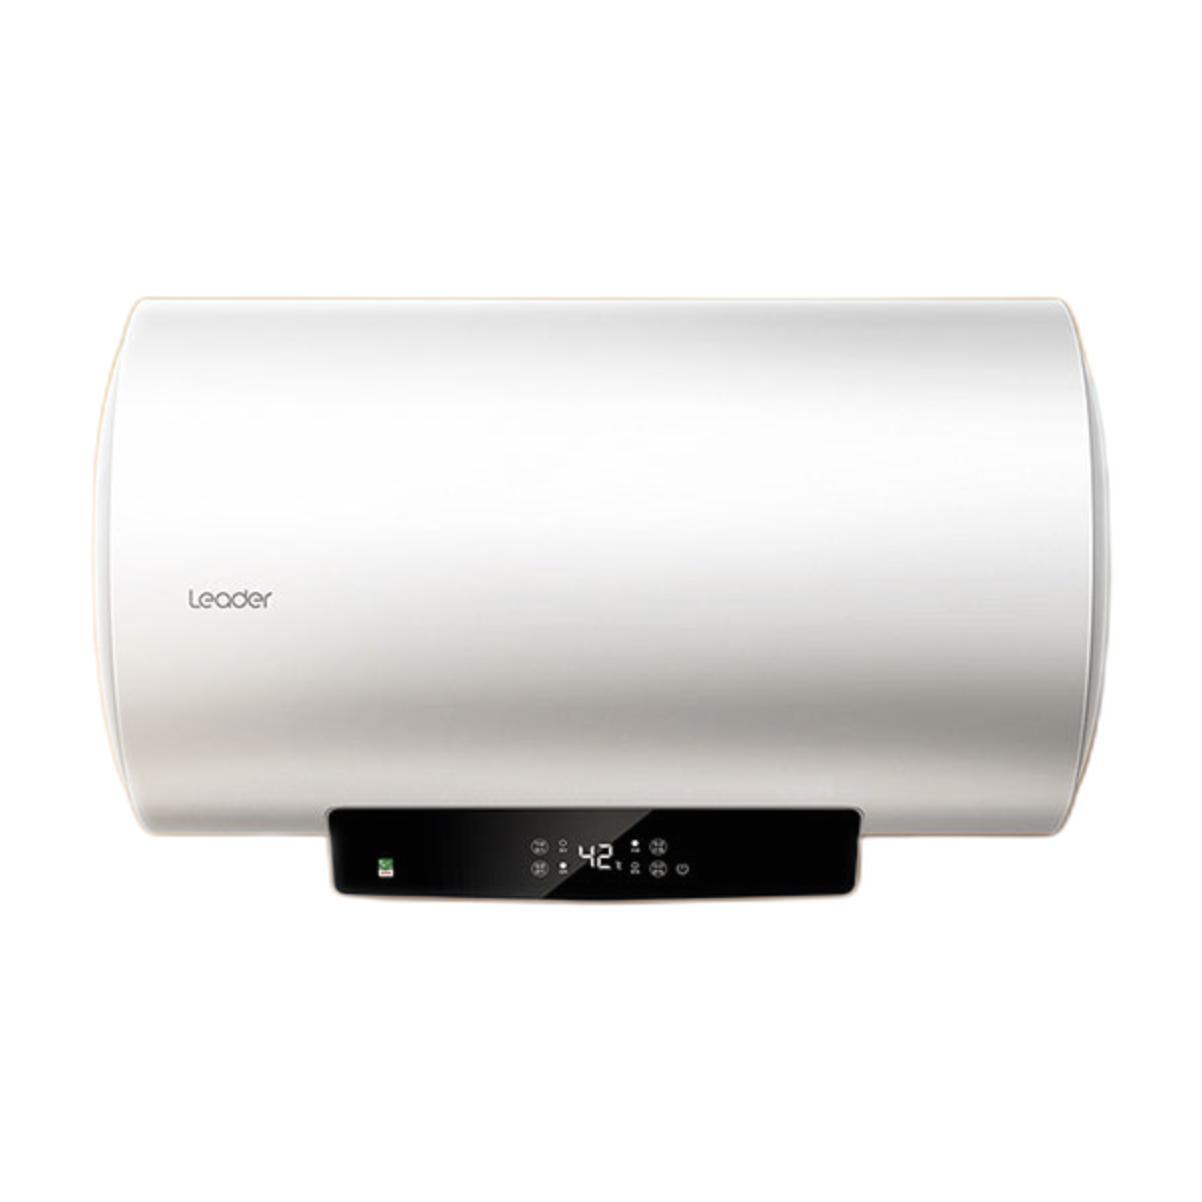 Haier 海尔 LEC8001-LD5 储水式热水器 80L 白色 3000W 券后729元